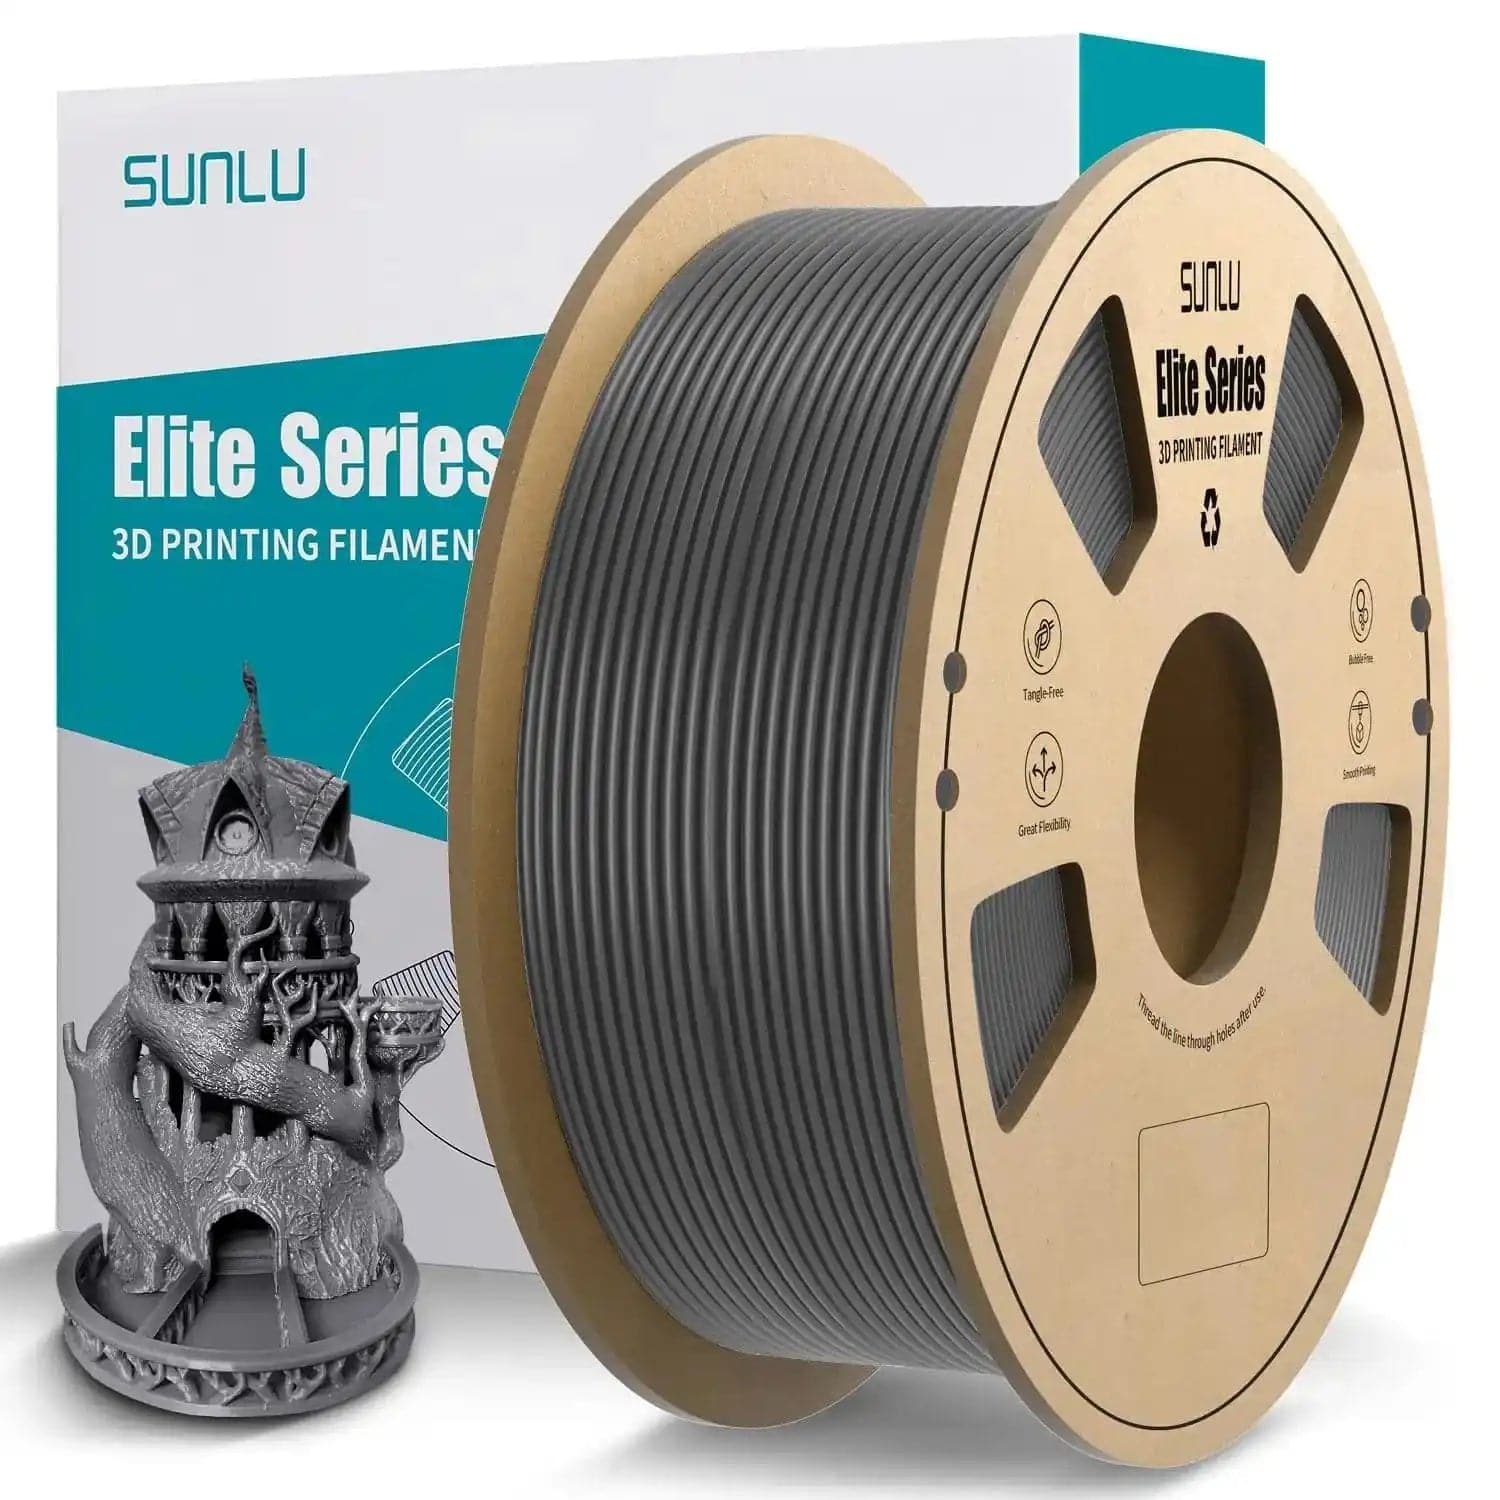 ELEGOO PLA Filament 1.75mm Gray 2KG, 3D Printer Filament Dimensional  Accuracy +/- 0.02mm, 2 Pack 1kg Cardboard Spool(2.2lbs) 3D Printing  Filament Fits